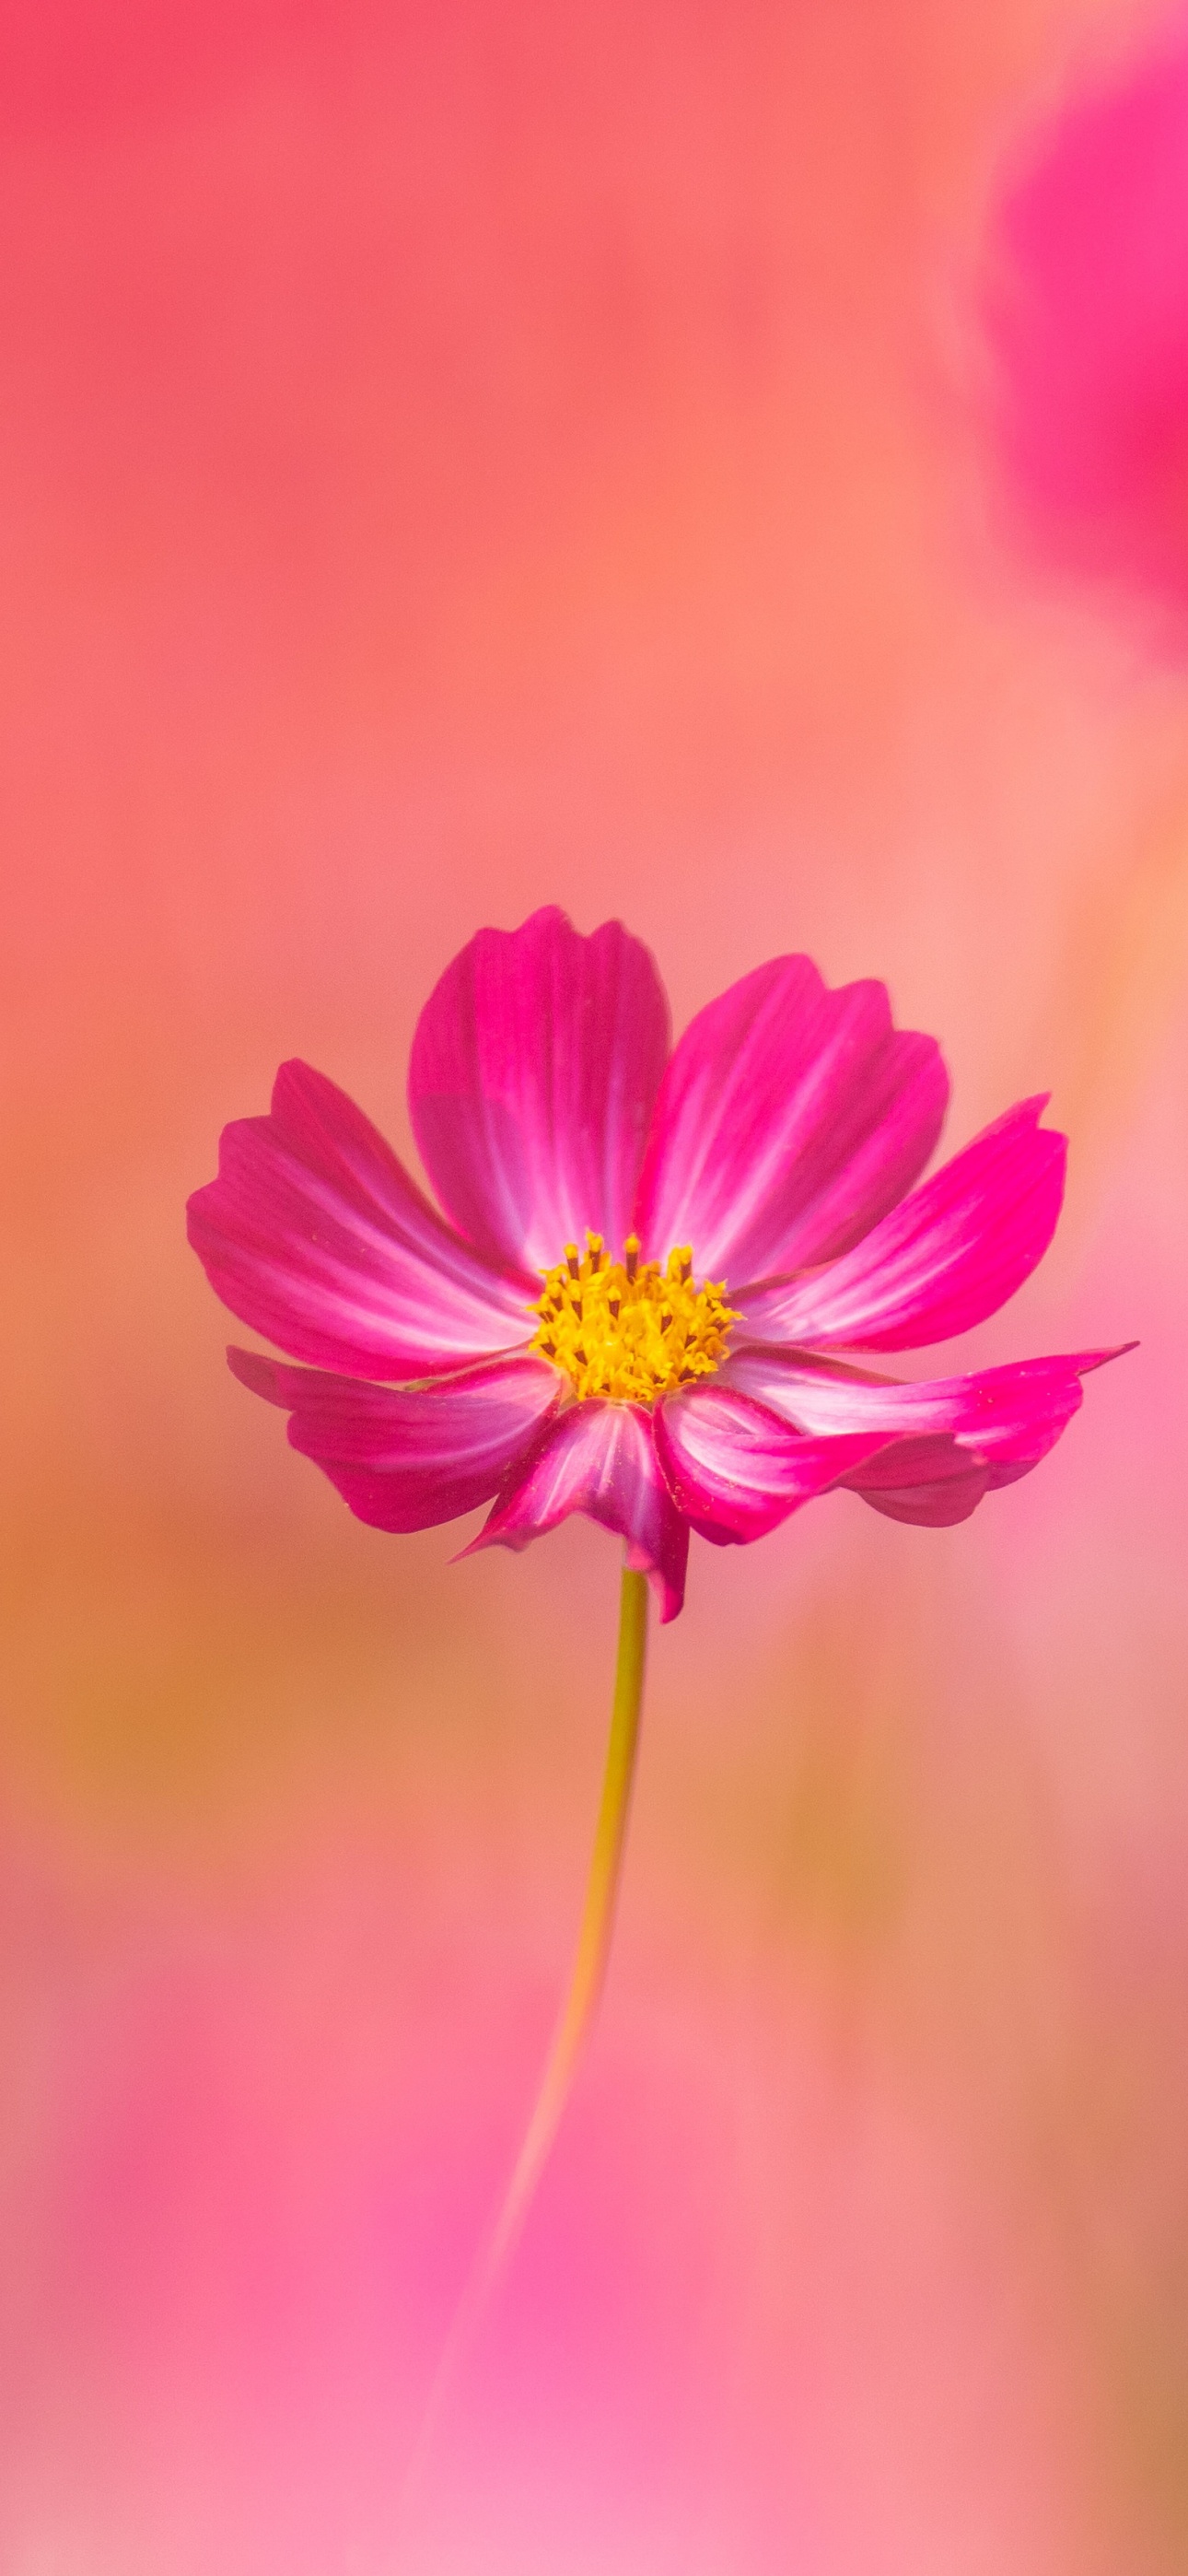 50,000+ Light Flower Pictures | Download Free Images on Unsplash